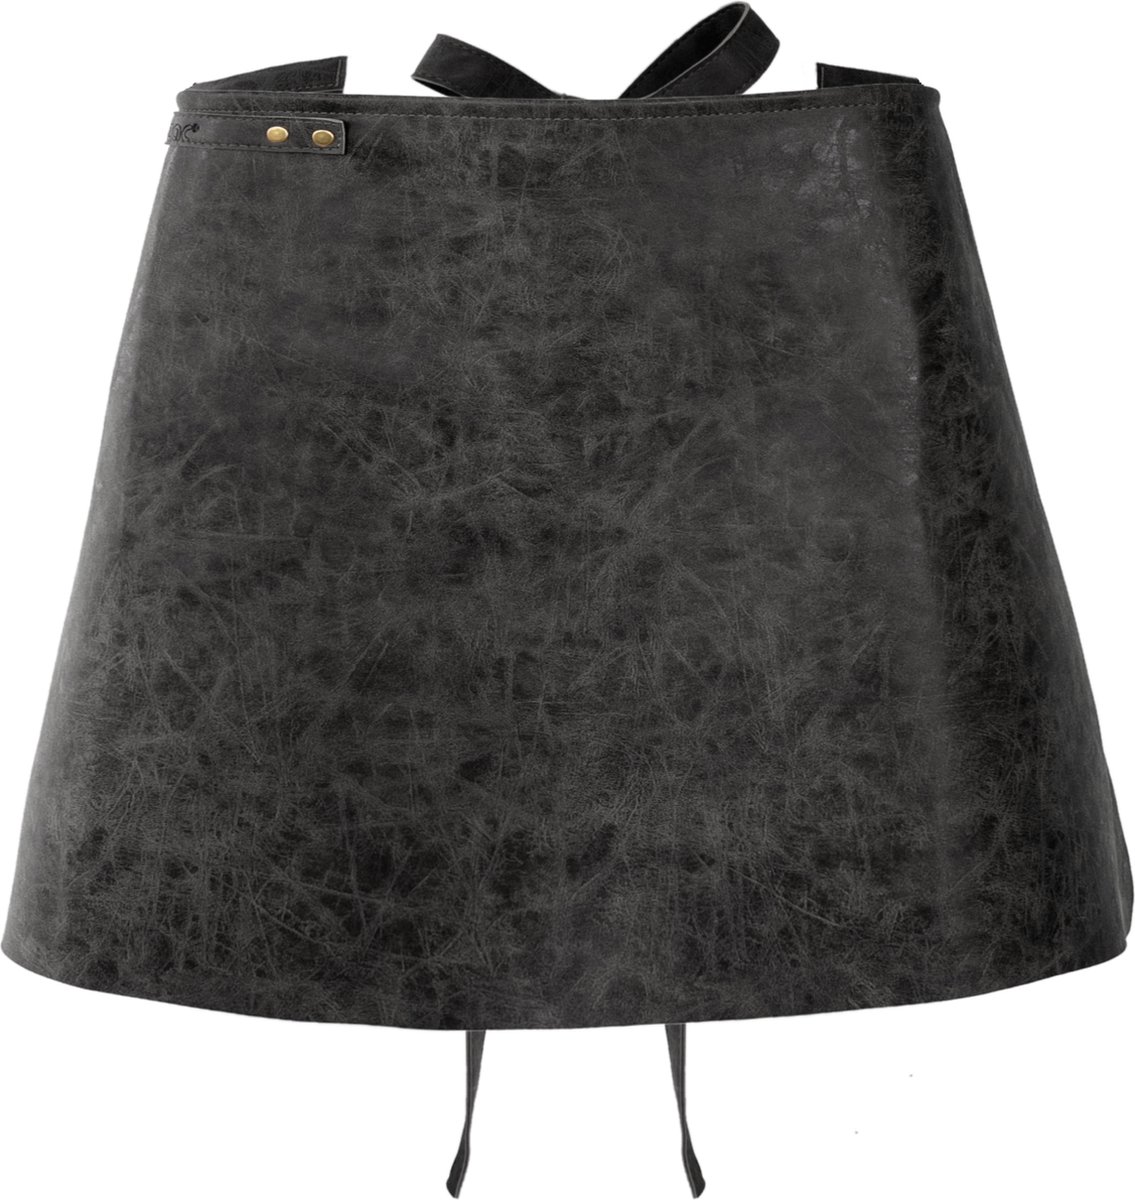 Schort TRUMAN Bistro (incl. Accesssory Bag), 70x45 cm, black